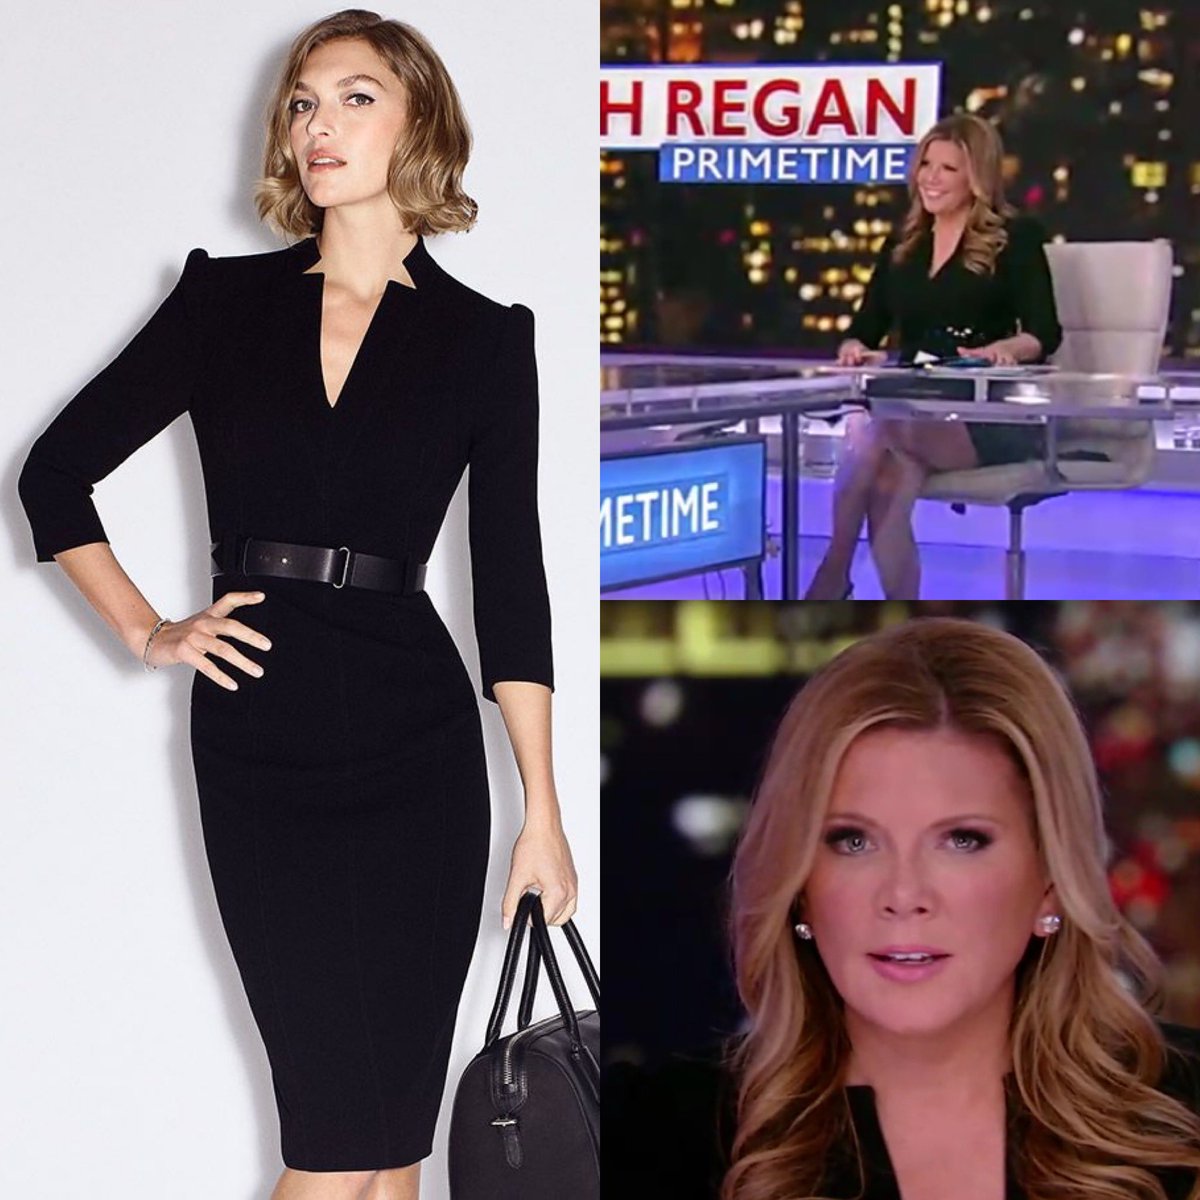 Trish Regan (@trish_regan) appears to have worn a Karen Millen Black Forever Dress today on #TrishReganPrimetime - the dress is no longer available. 
#foxbusiness #foxnews #foxnewsfashion